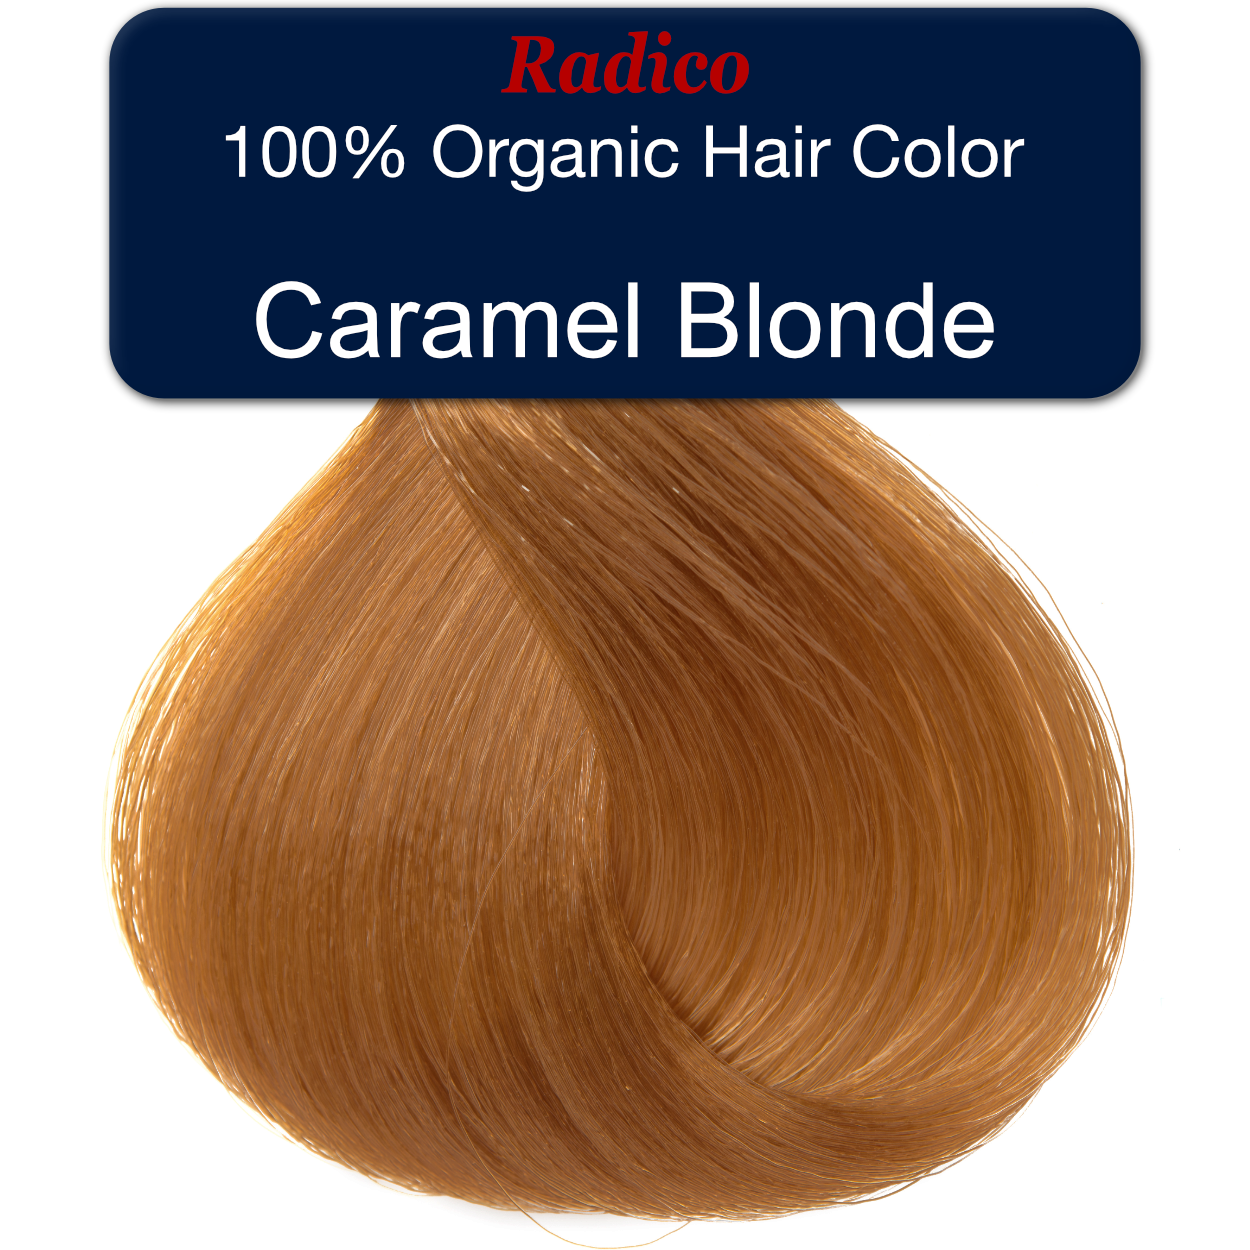 caramel blonde hair pale skin